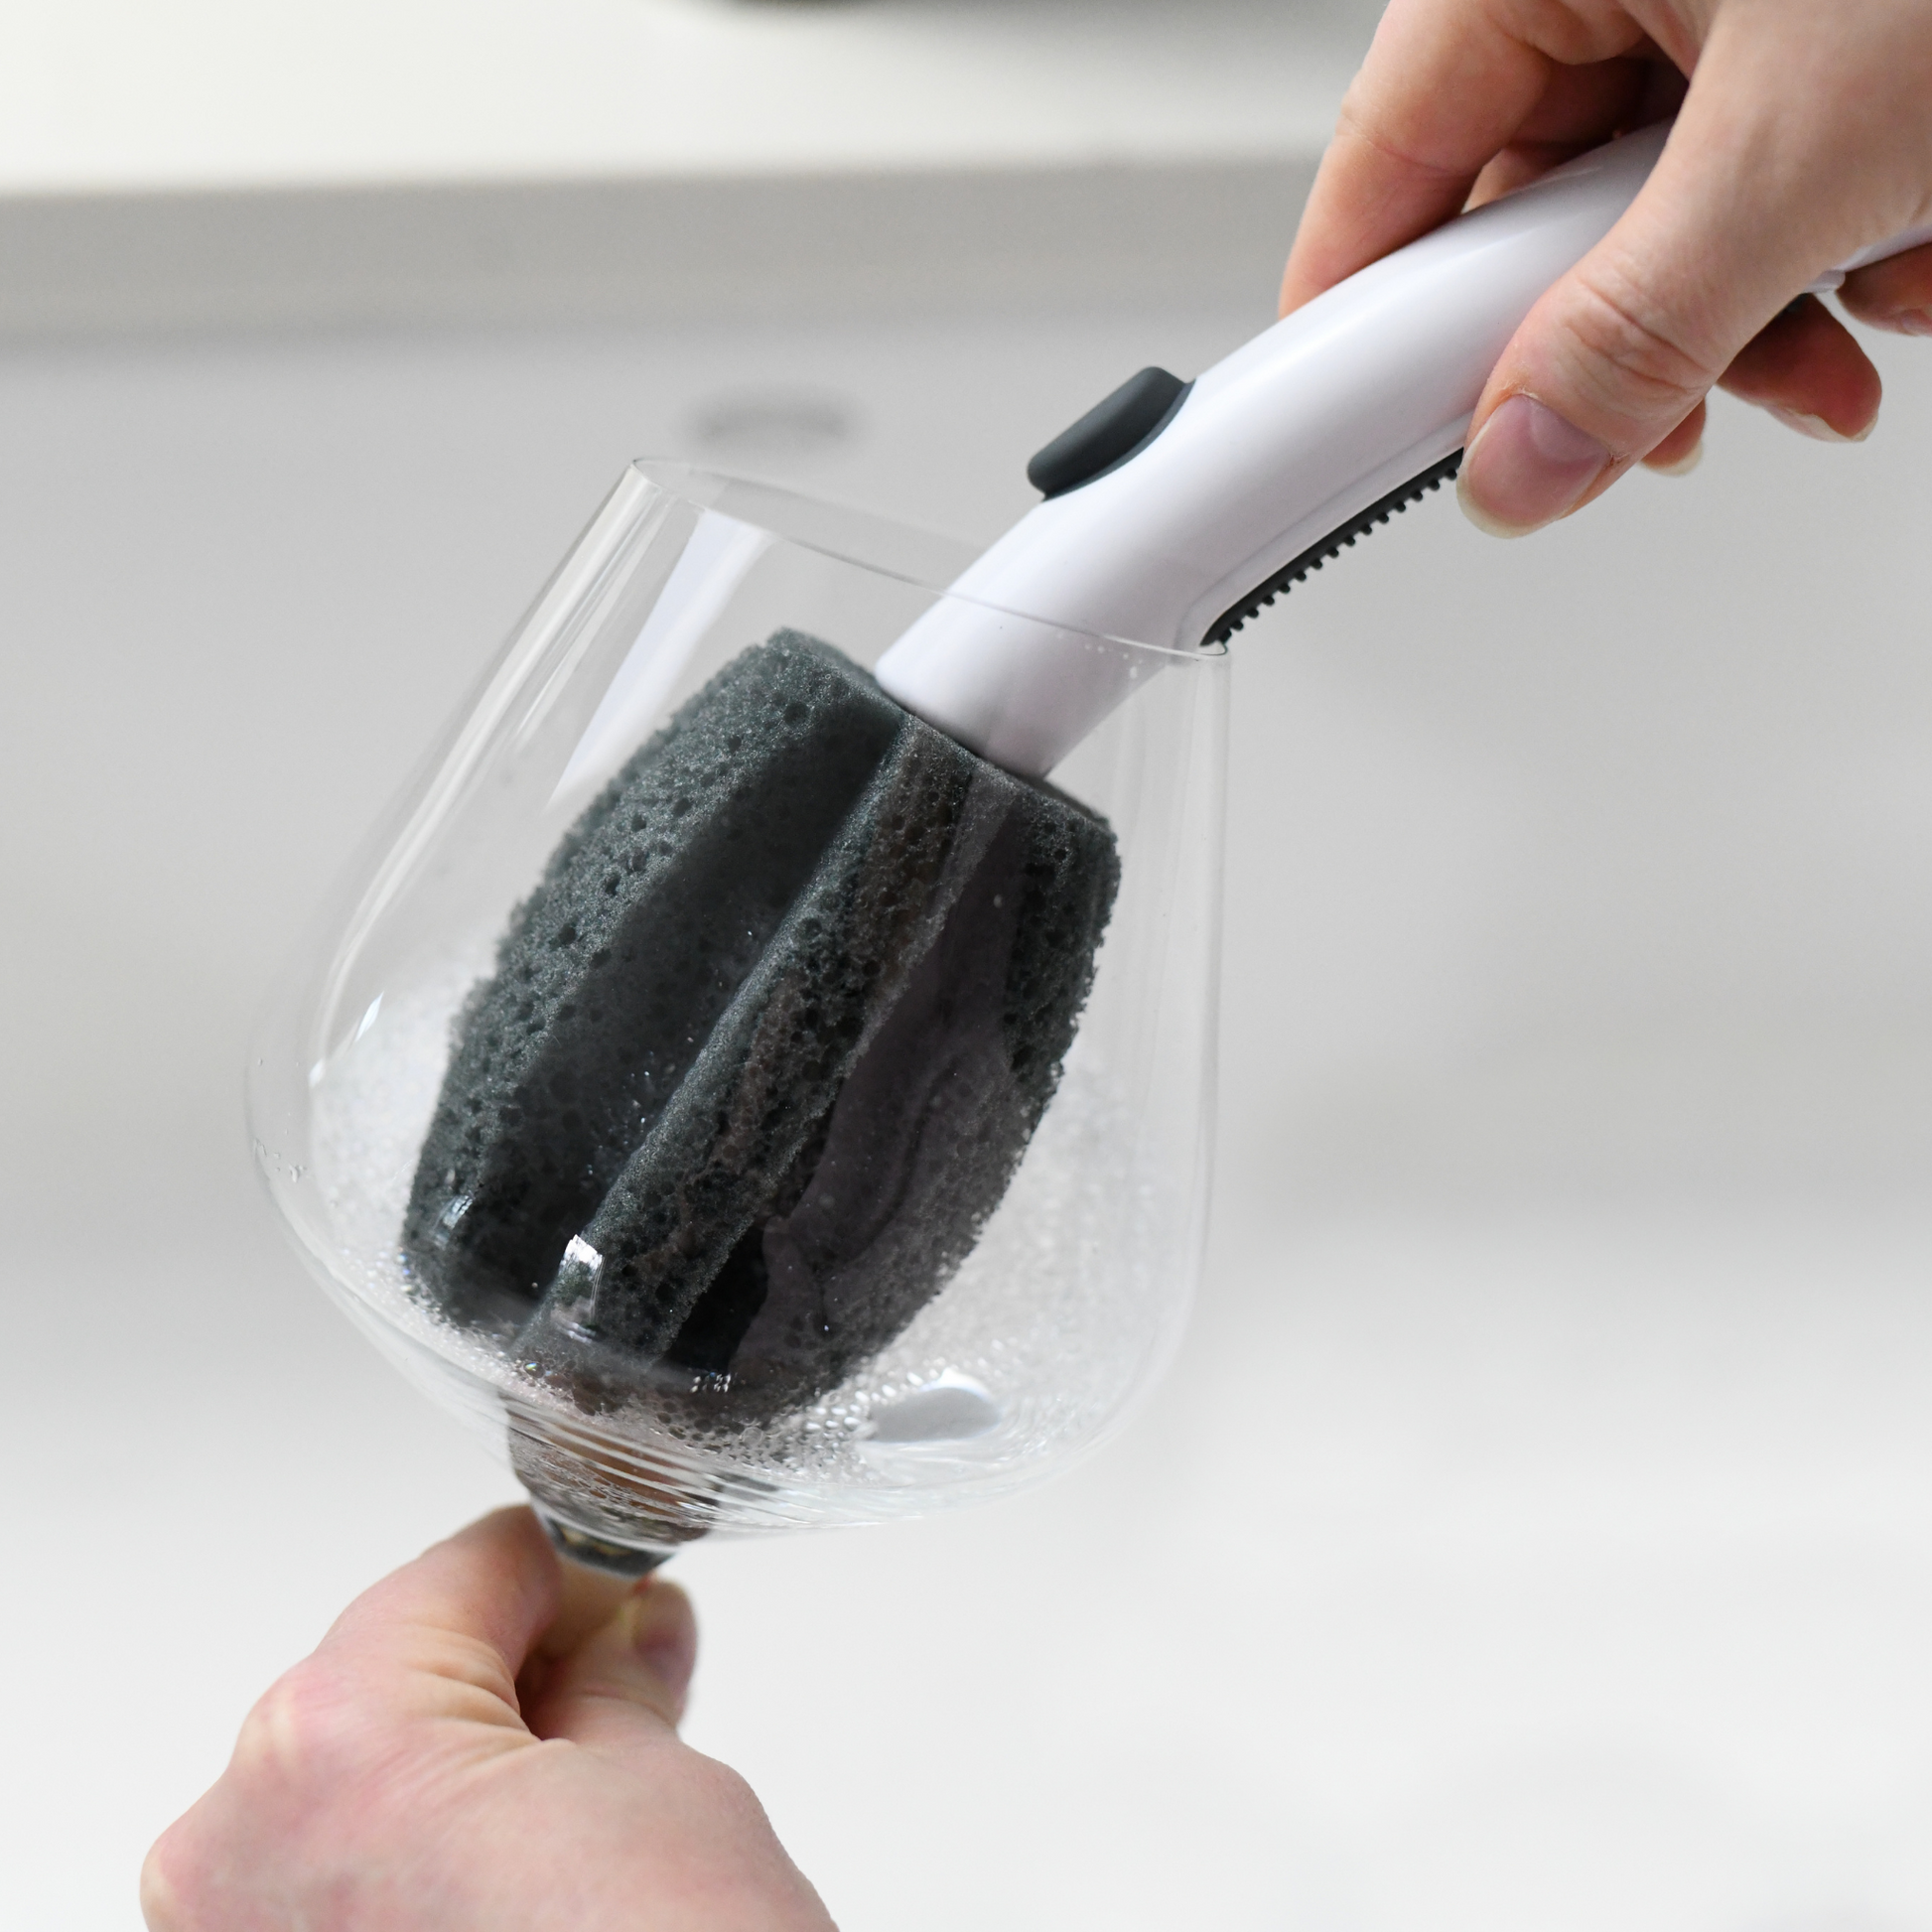 The Wine Brush - Replacement Sponge Heads